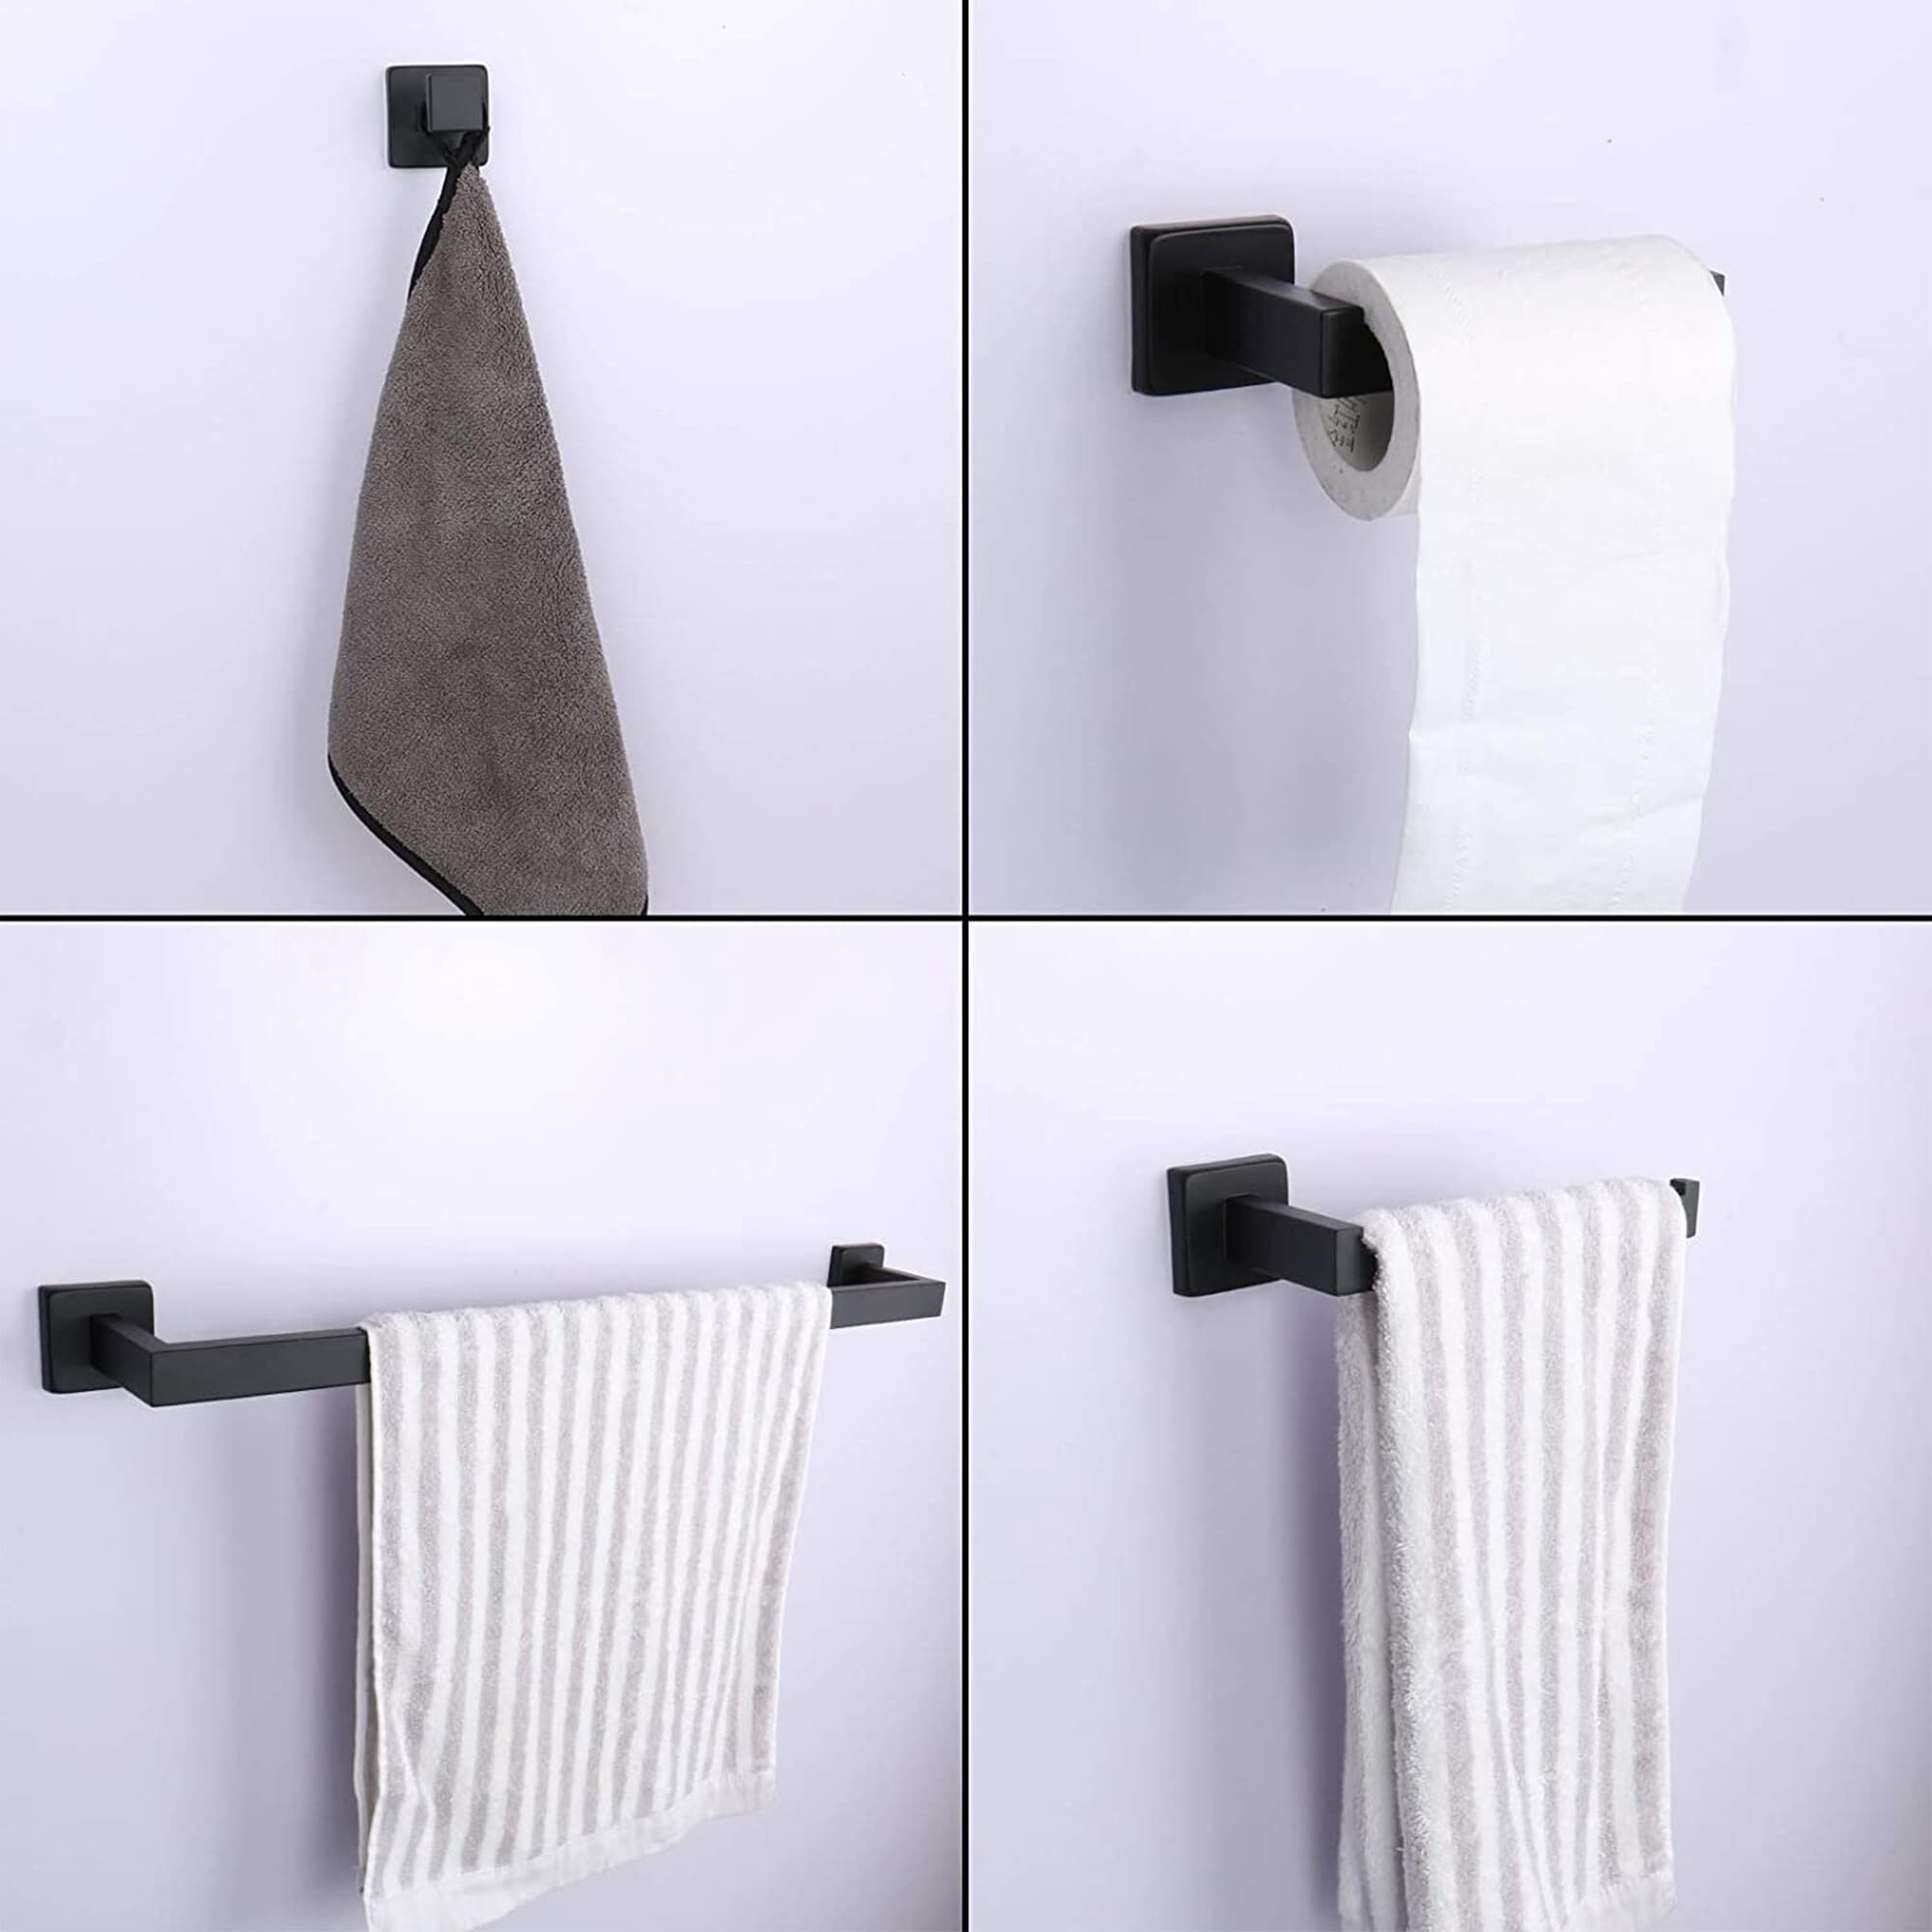 Details about   4 Pcs Bathroom Hardware Set Bath Accessory Hook Bar Ring Toilet Paper Holder 